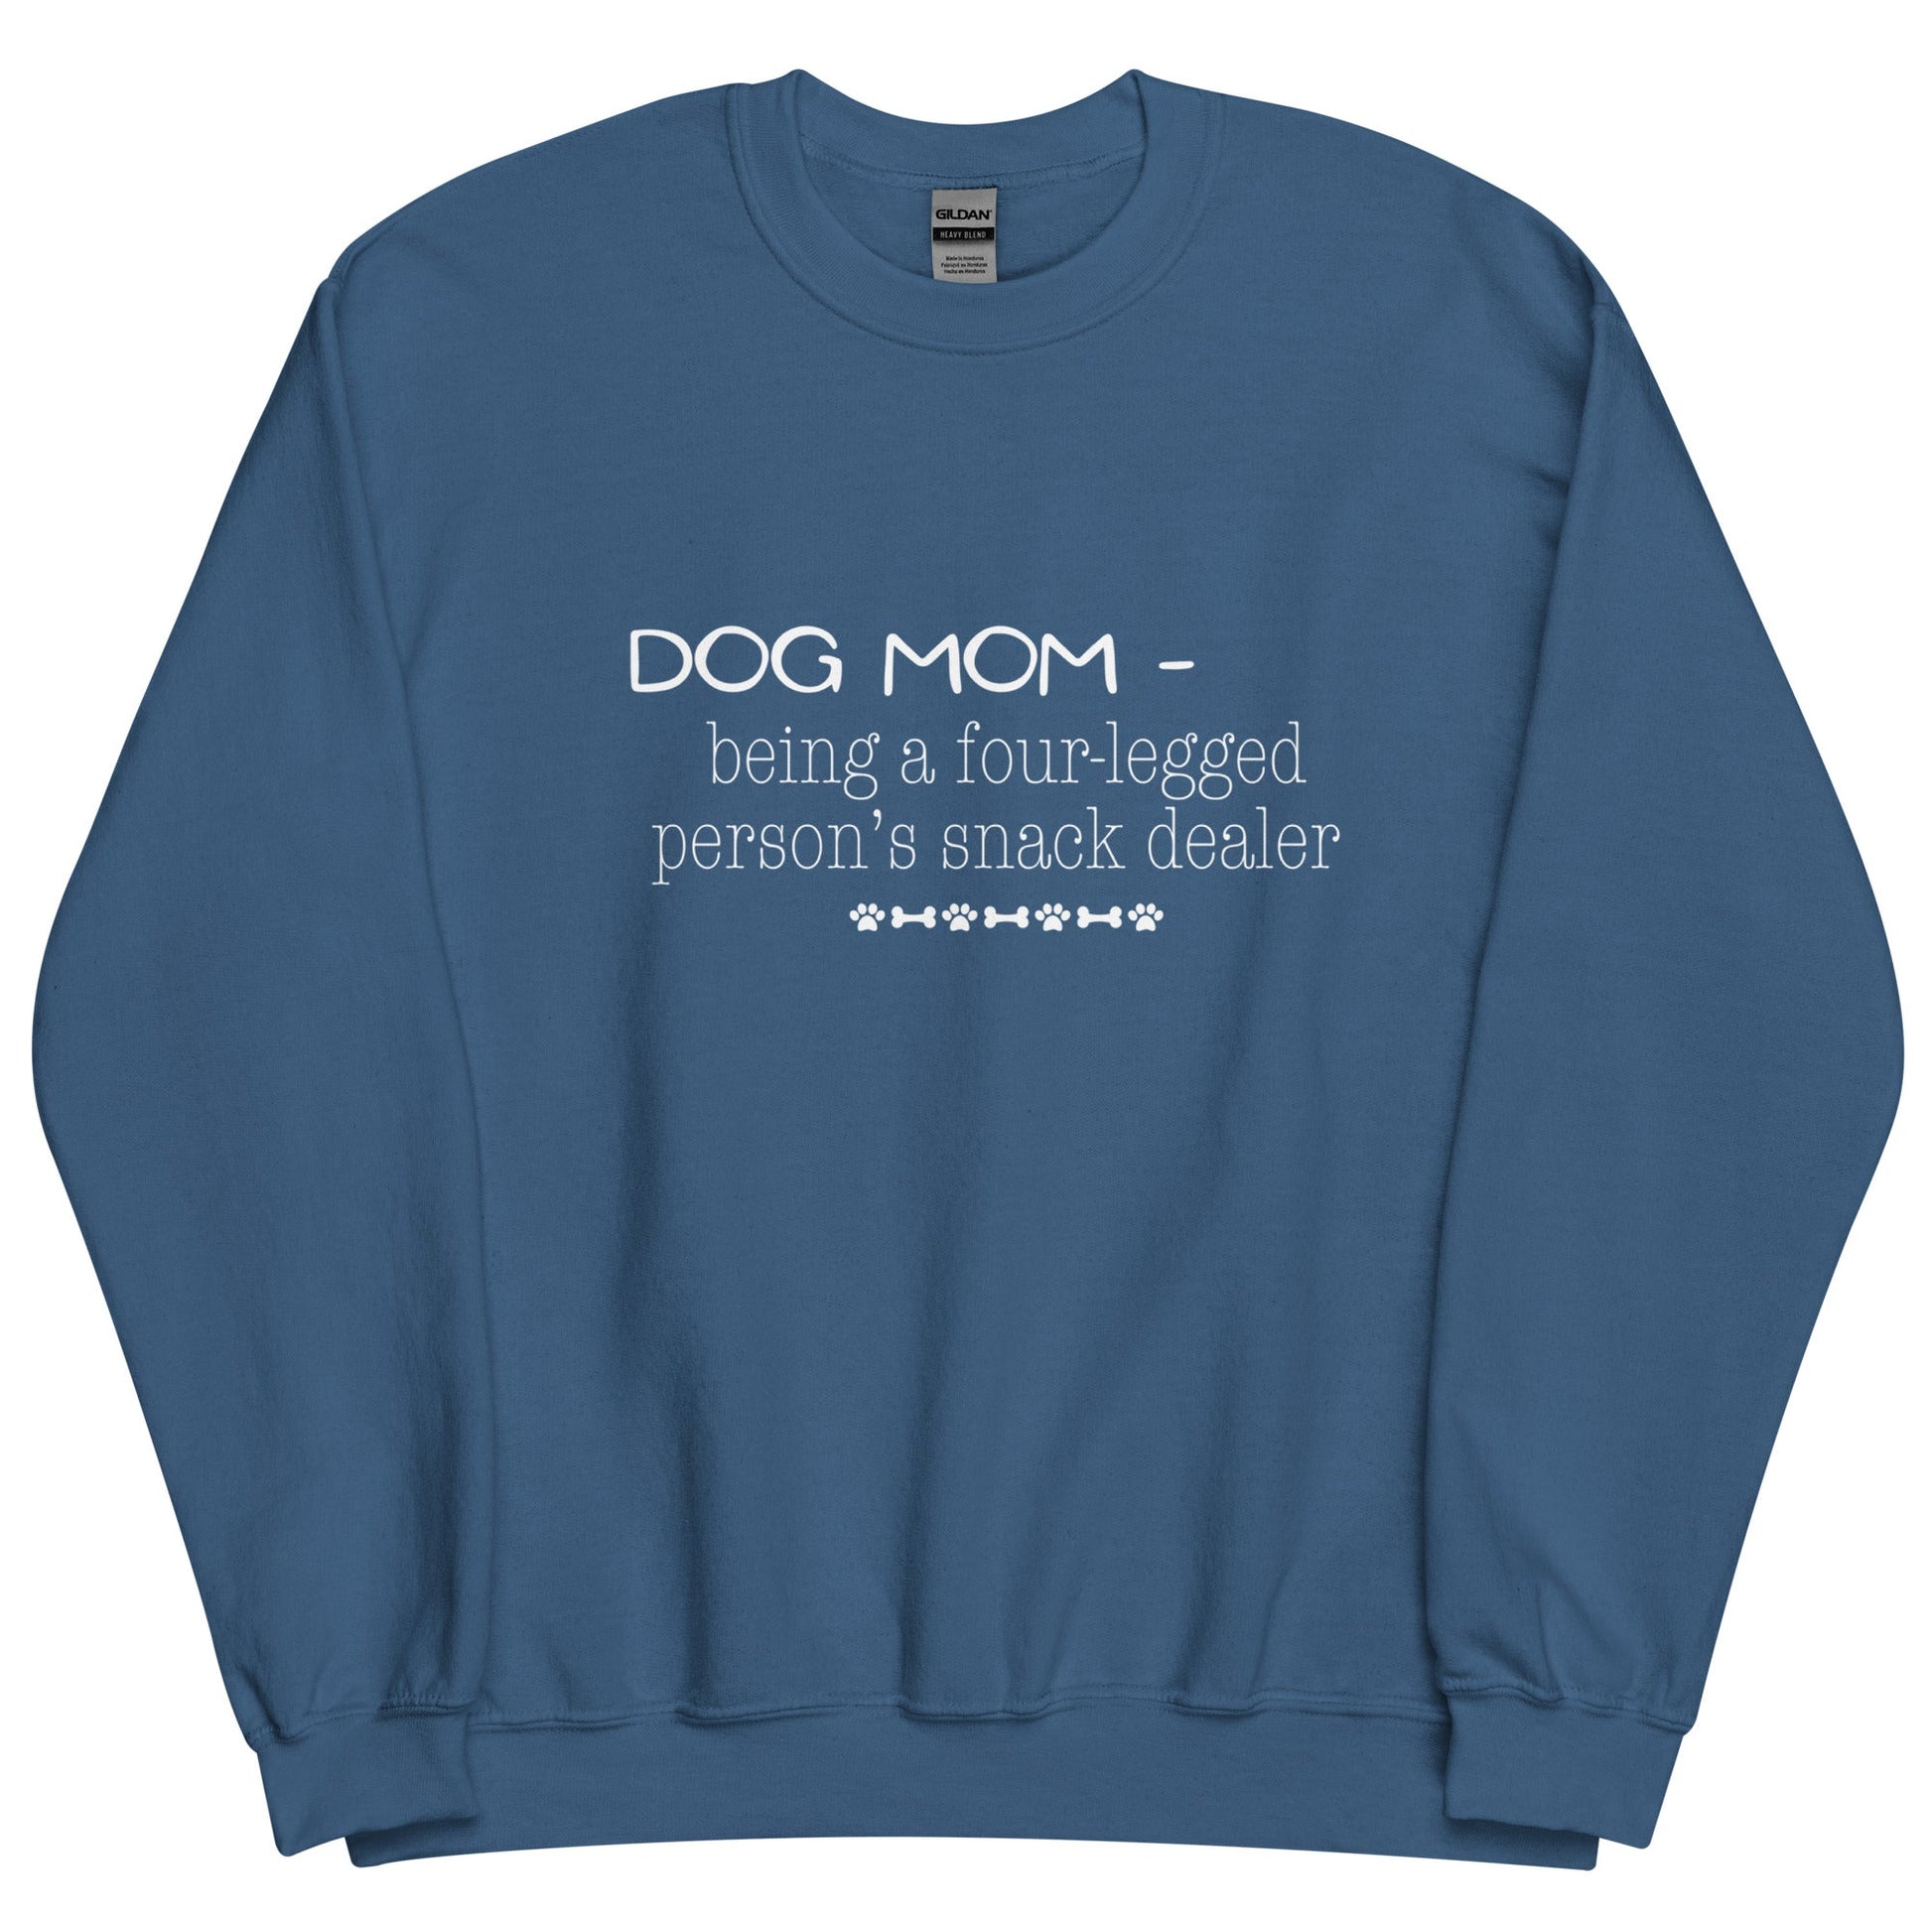 Dog Mom Definition Sweatshirt - Indigo Blue / S